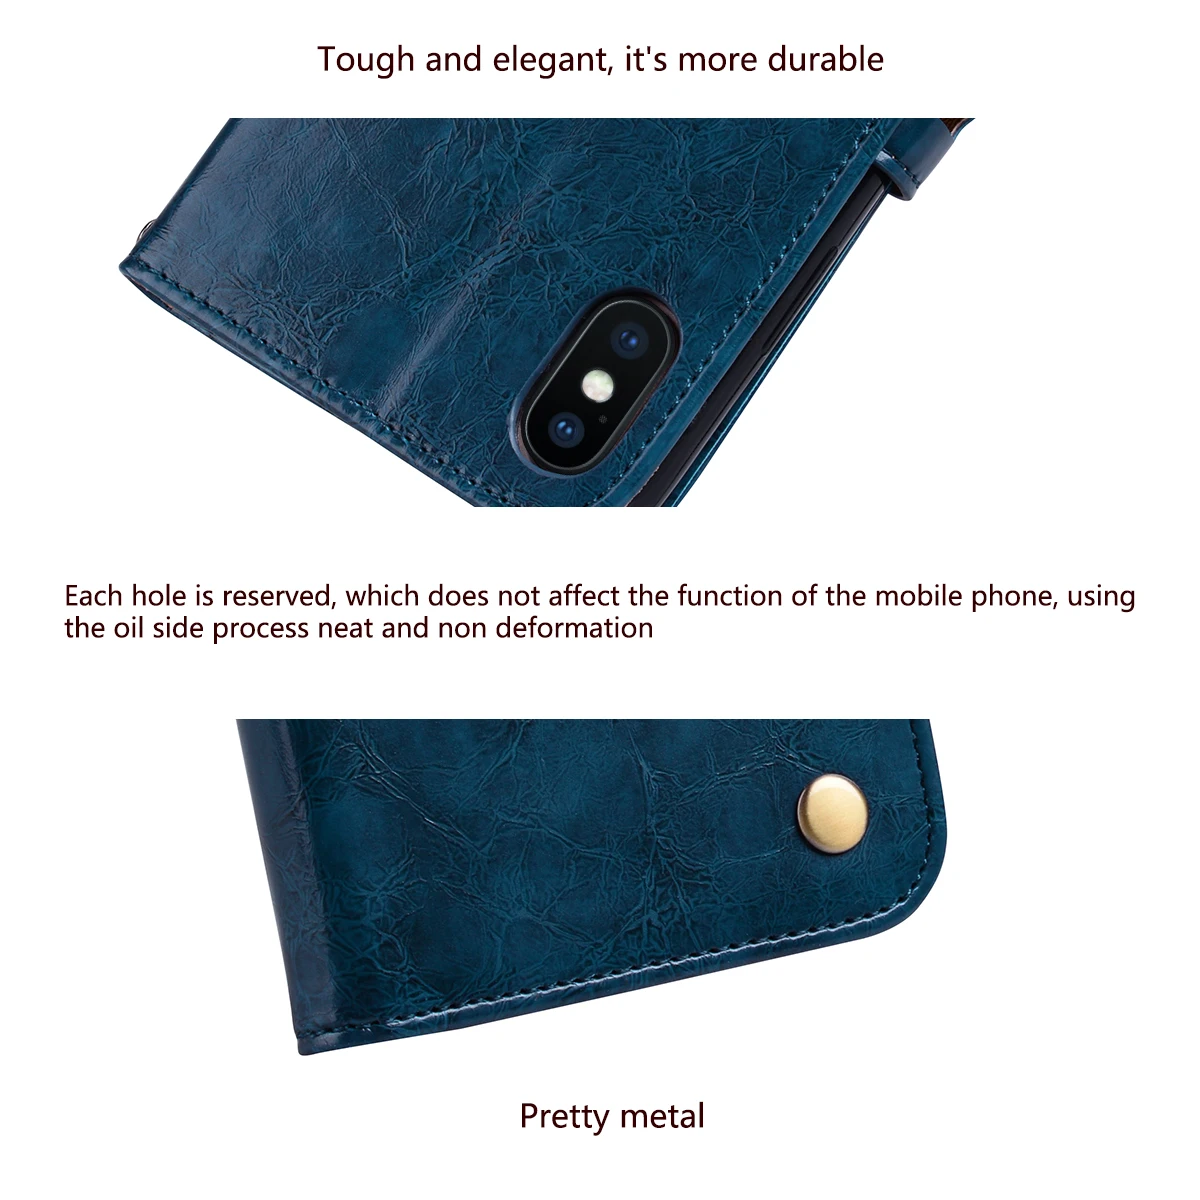 xiaomi leather case chain Luxury Business Leather Case For Xiaomi Redmi K20 Pro k 20 Cover Flip Wallet Case For Redmi Note 7 note7 Redmi Go 7 Capa Coque xiaomi leather case charging